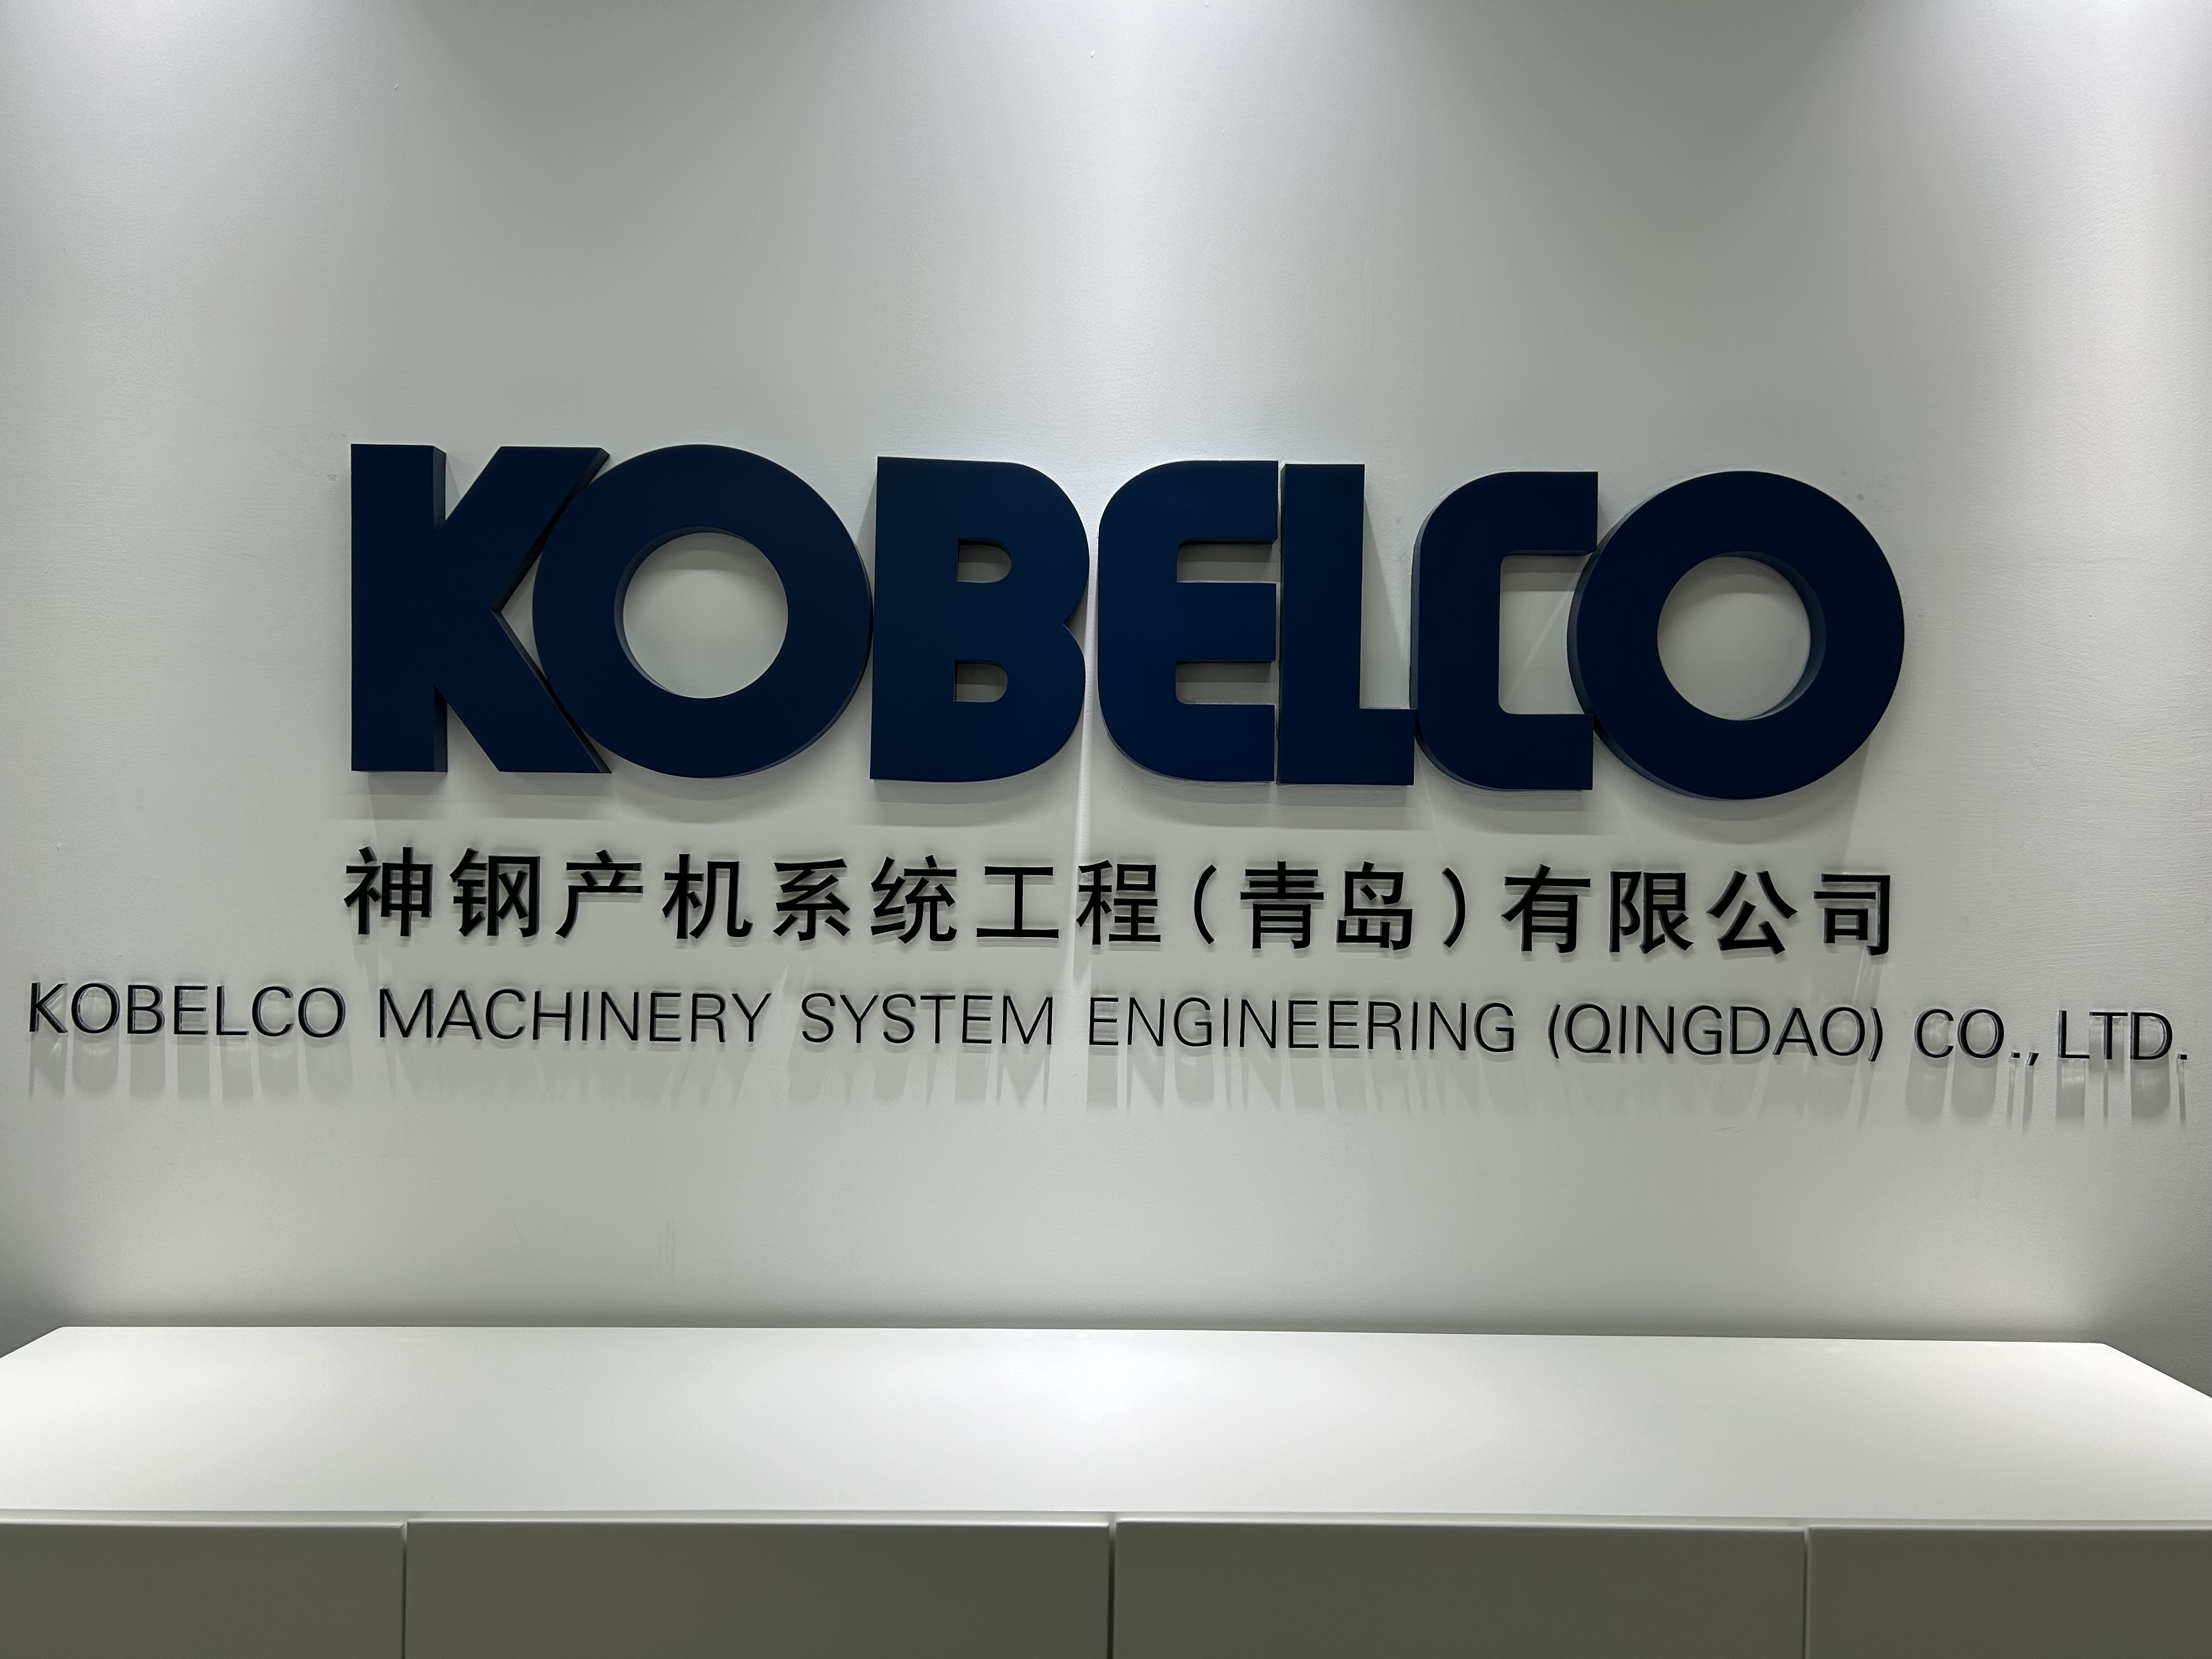 Kobelco Machinery System Engineering Qingdao Co., Ltd.